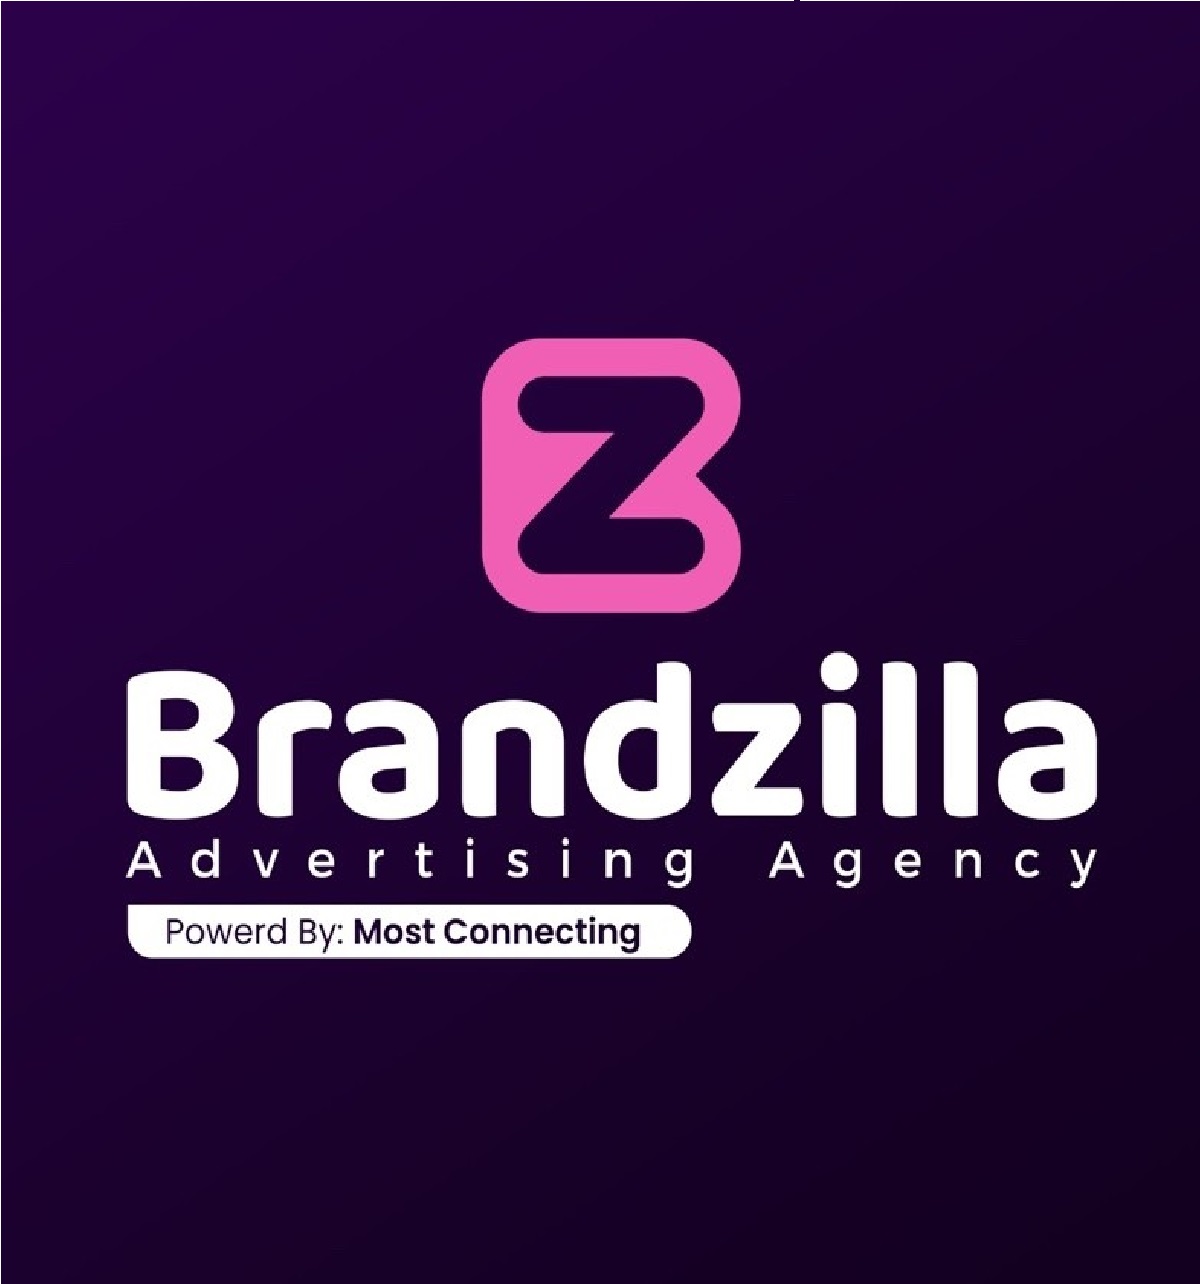 Brandzilla advertising agency